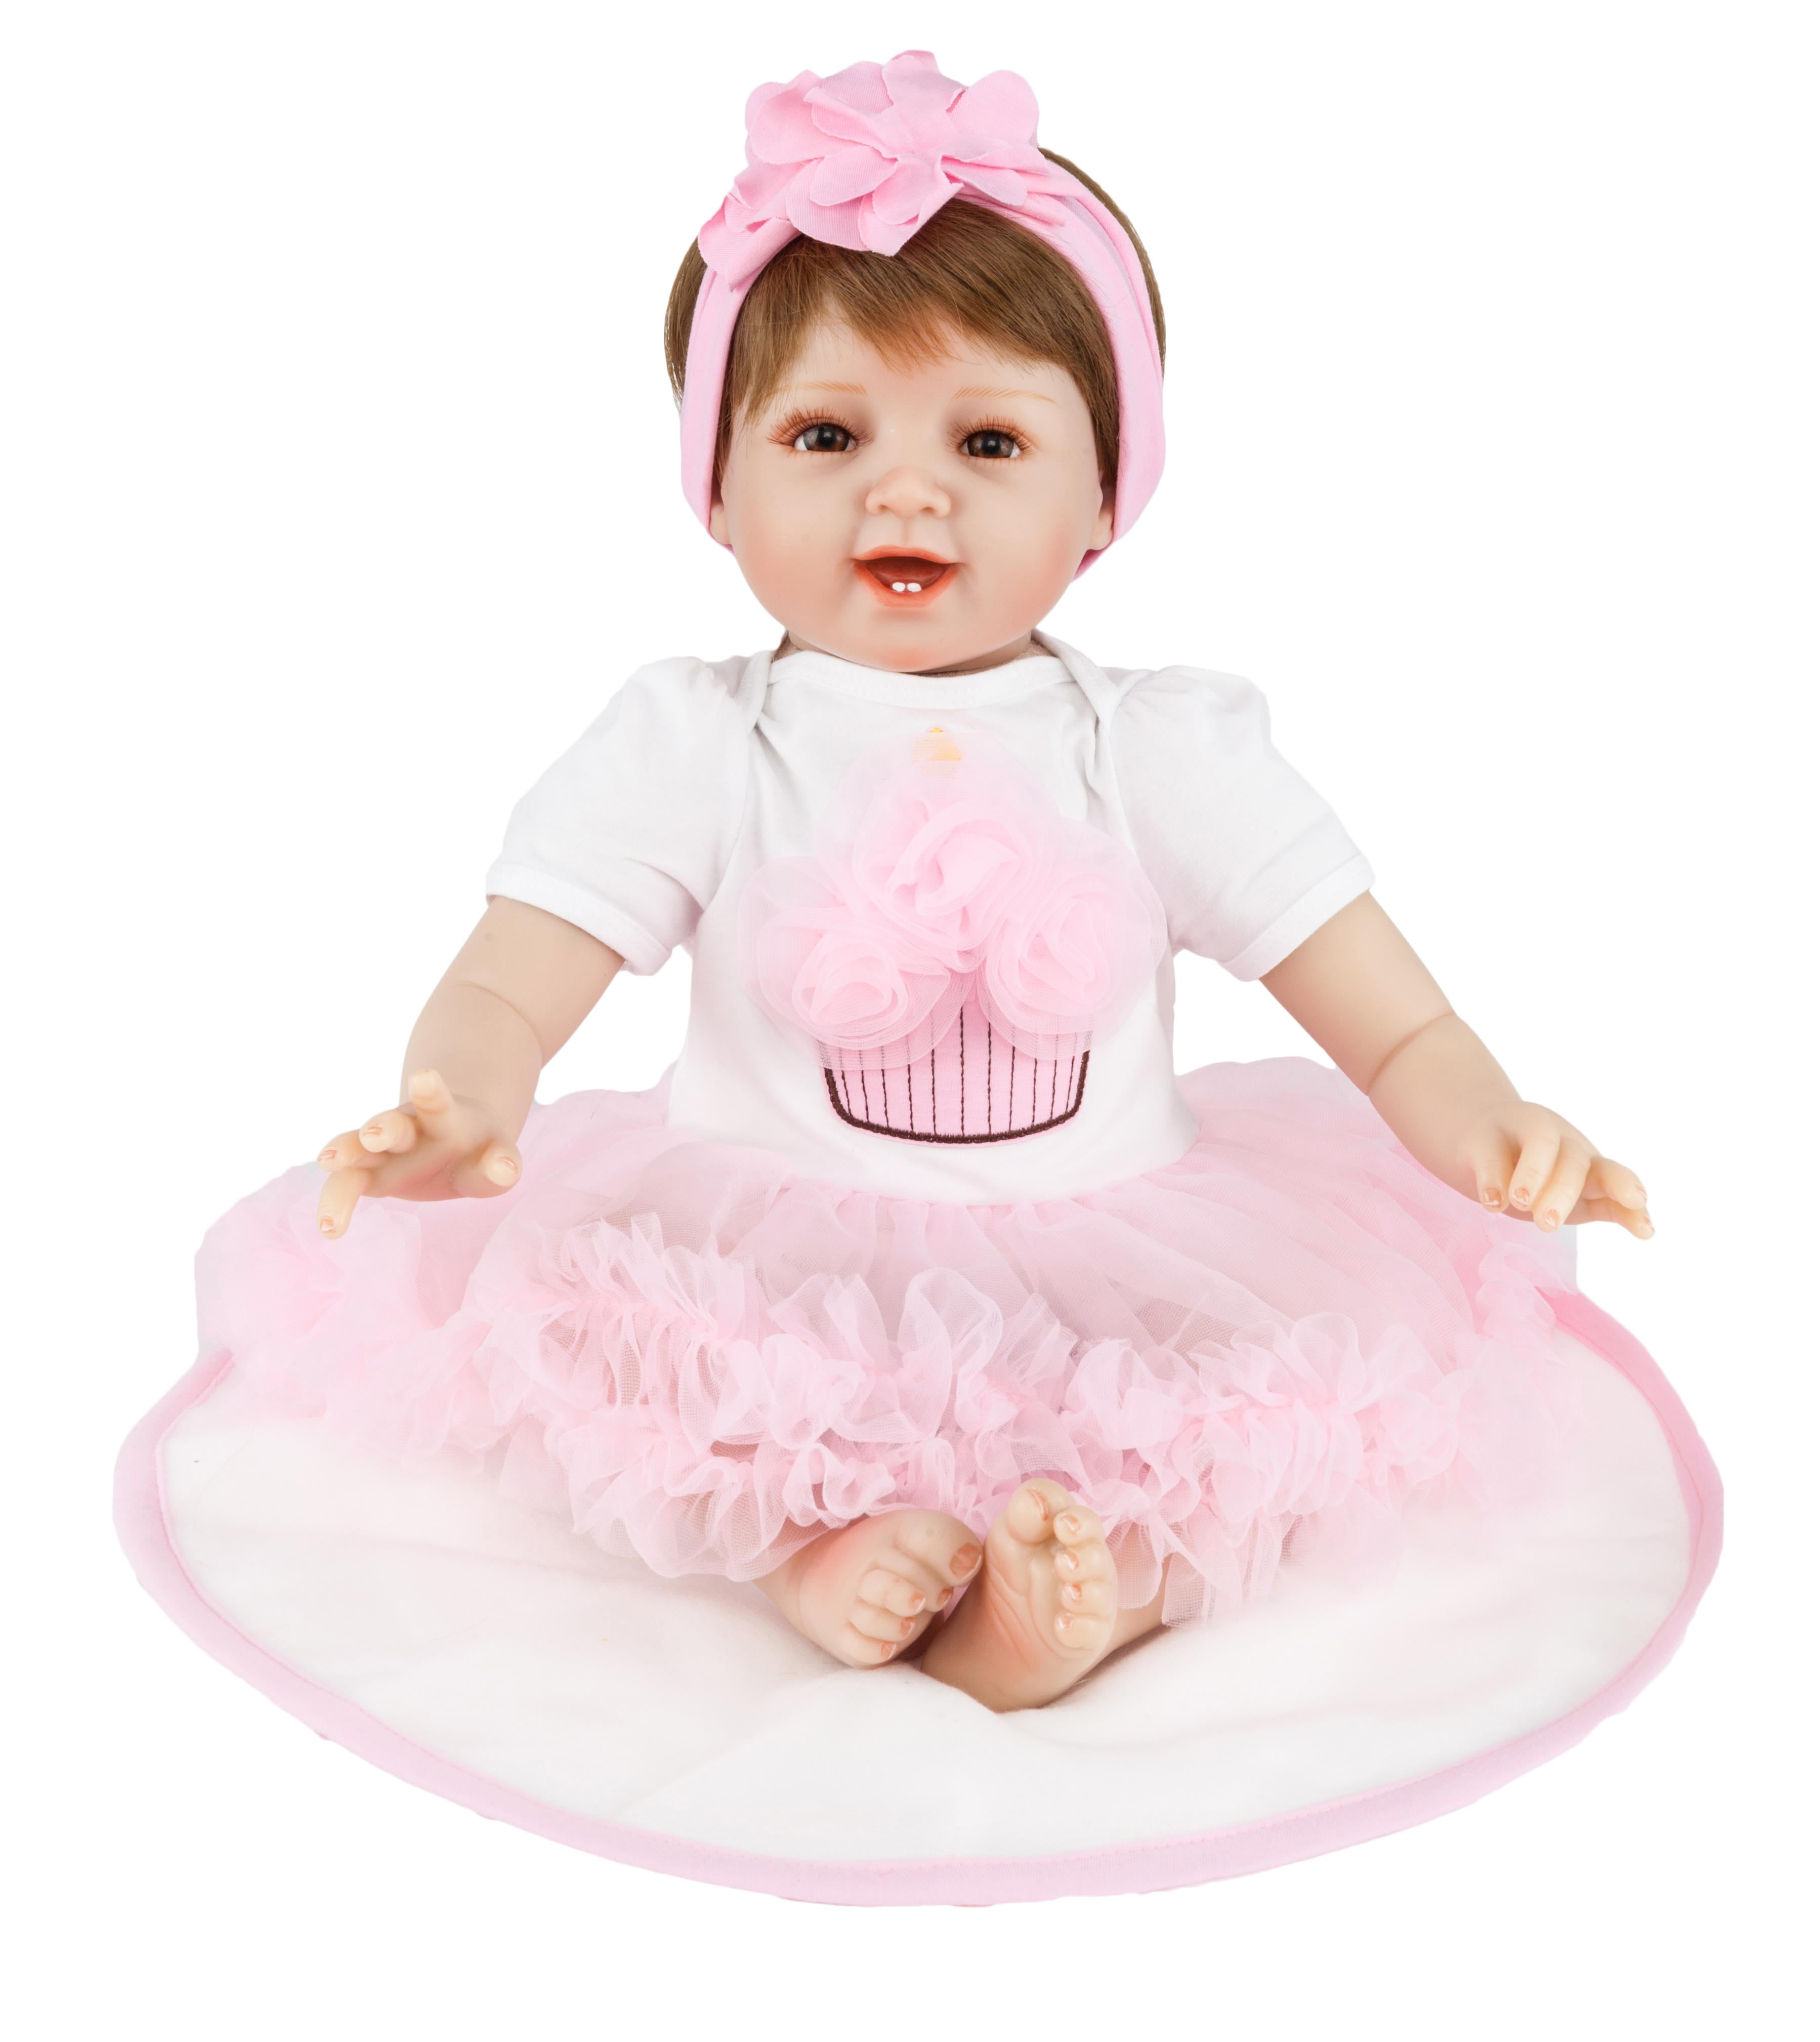 JOYMOR 22in Reborn Baby Dolls Silicone Realistic Baby Dolls lifelike i –  Joymor